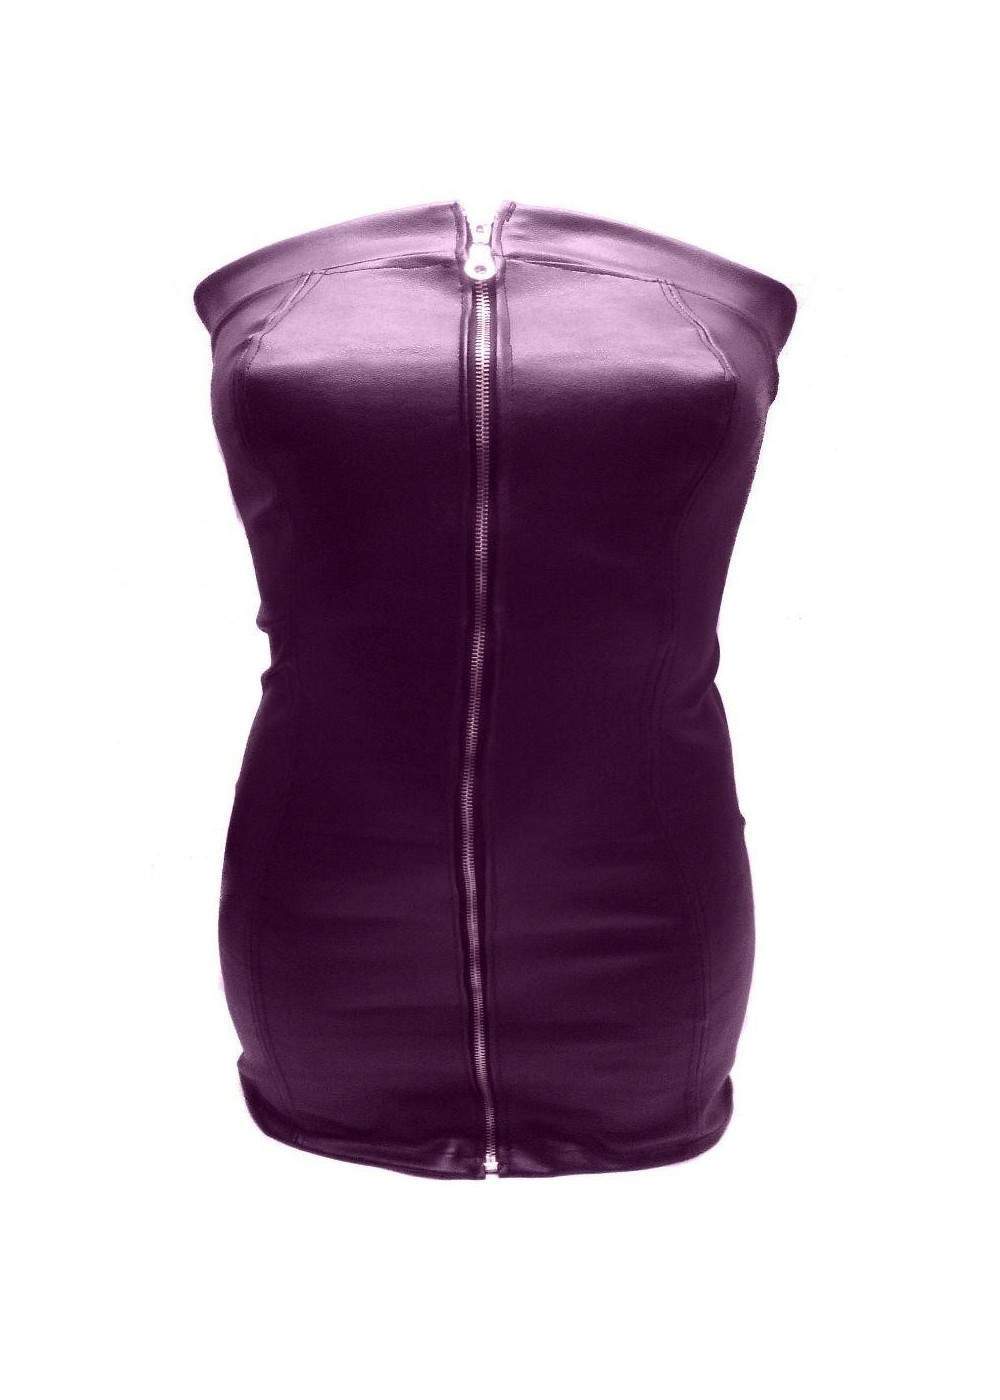 Designer Softleather Dress purple size L - XXL (44 - 52)